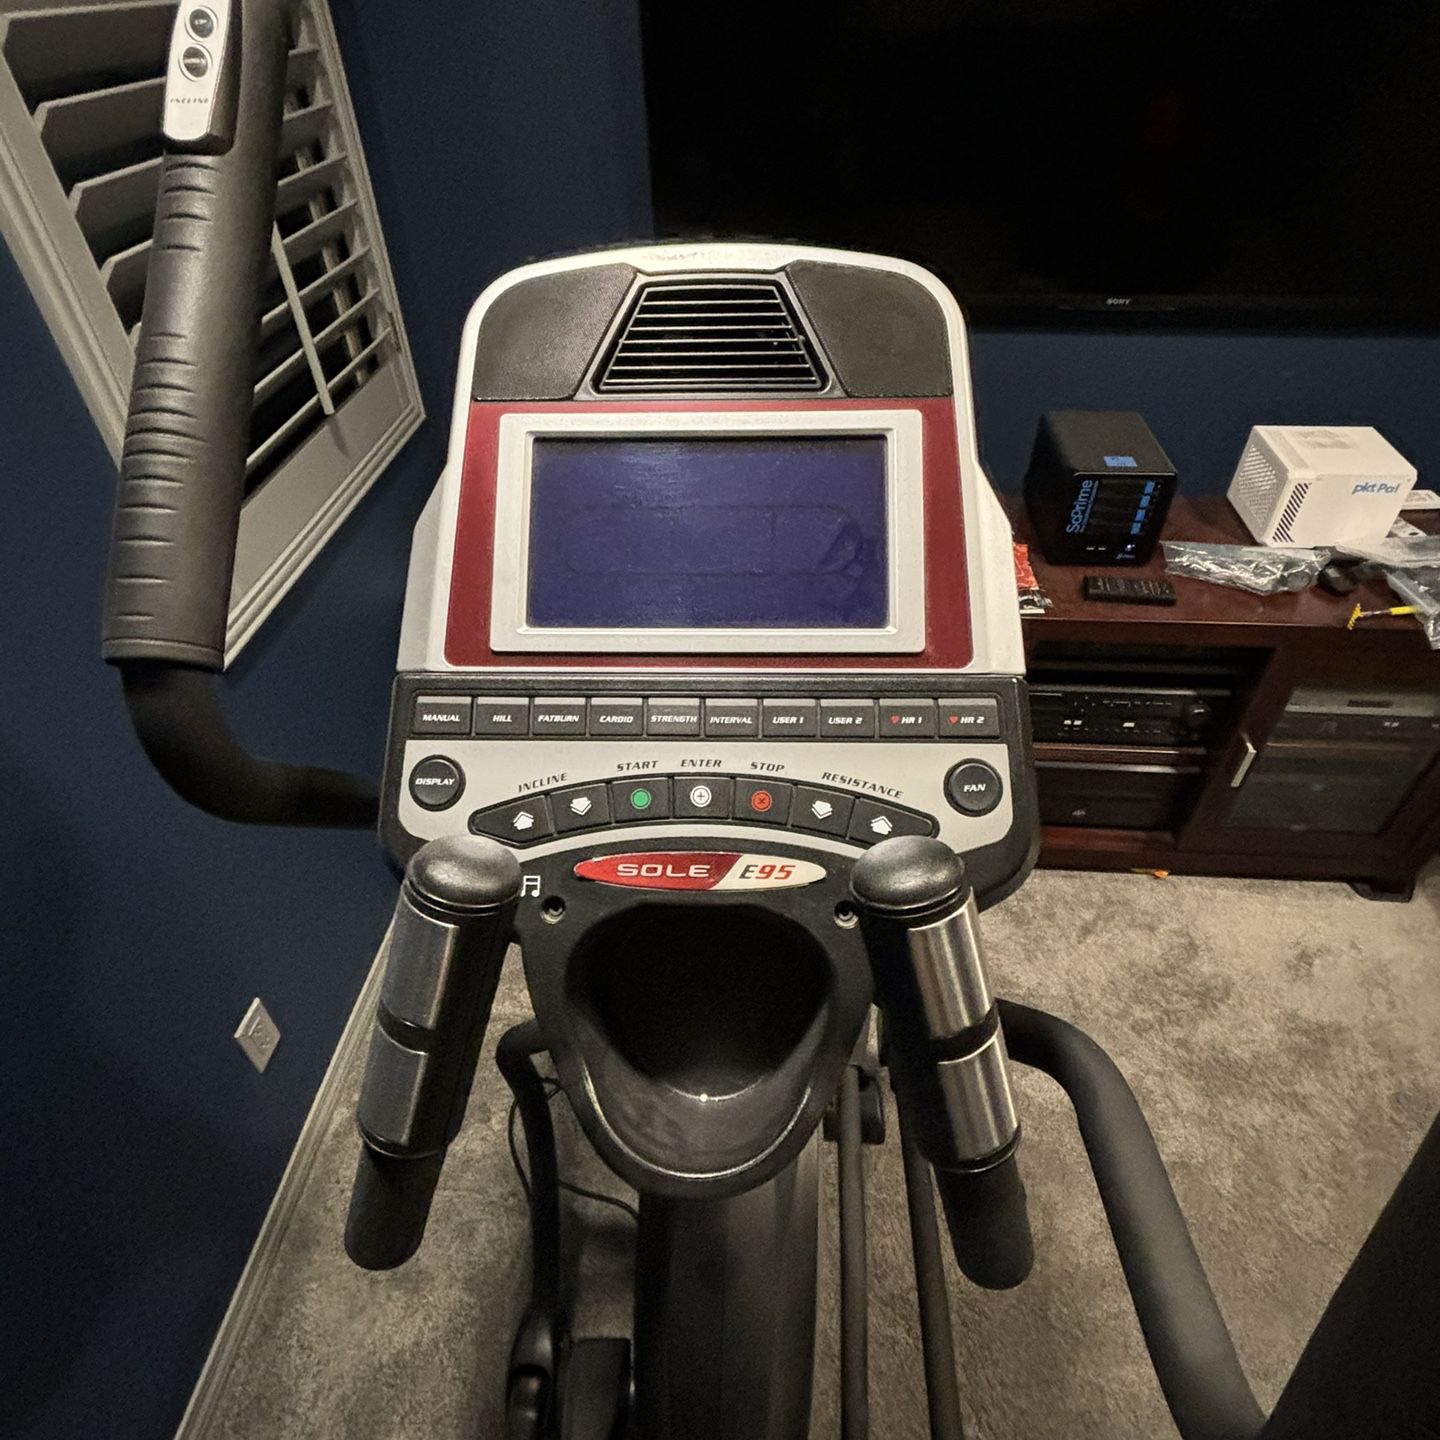 Sole E95 Elliptical Home Gym Exercise Treadmill Machine